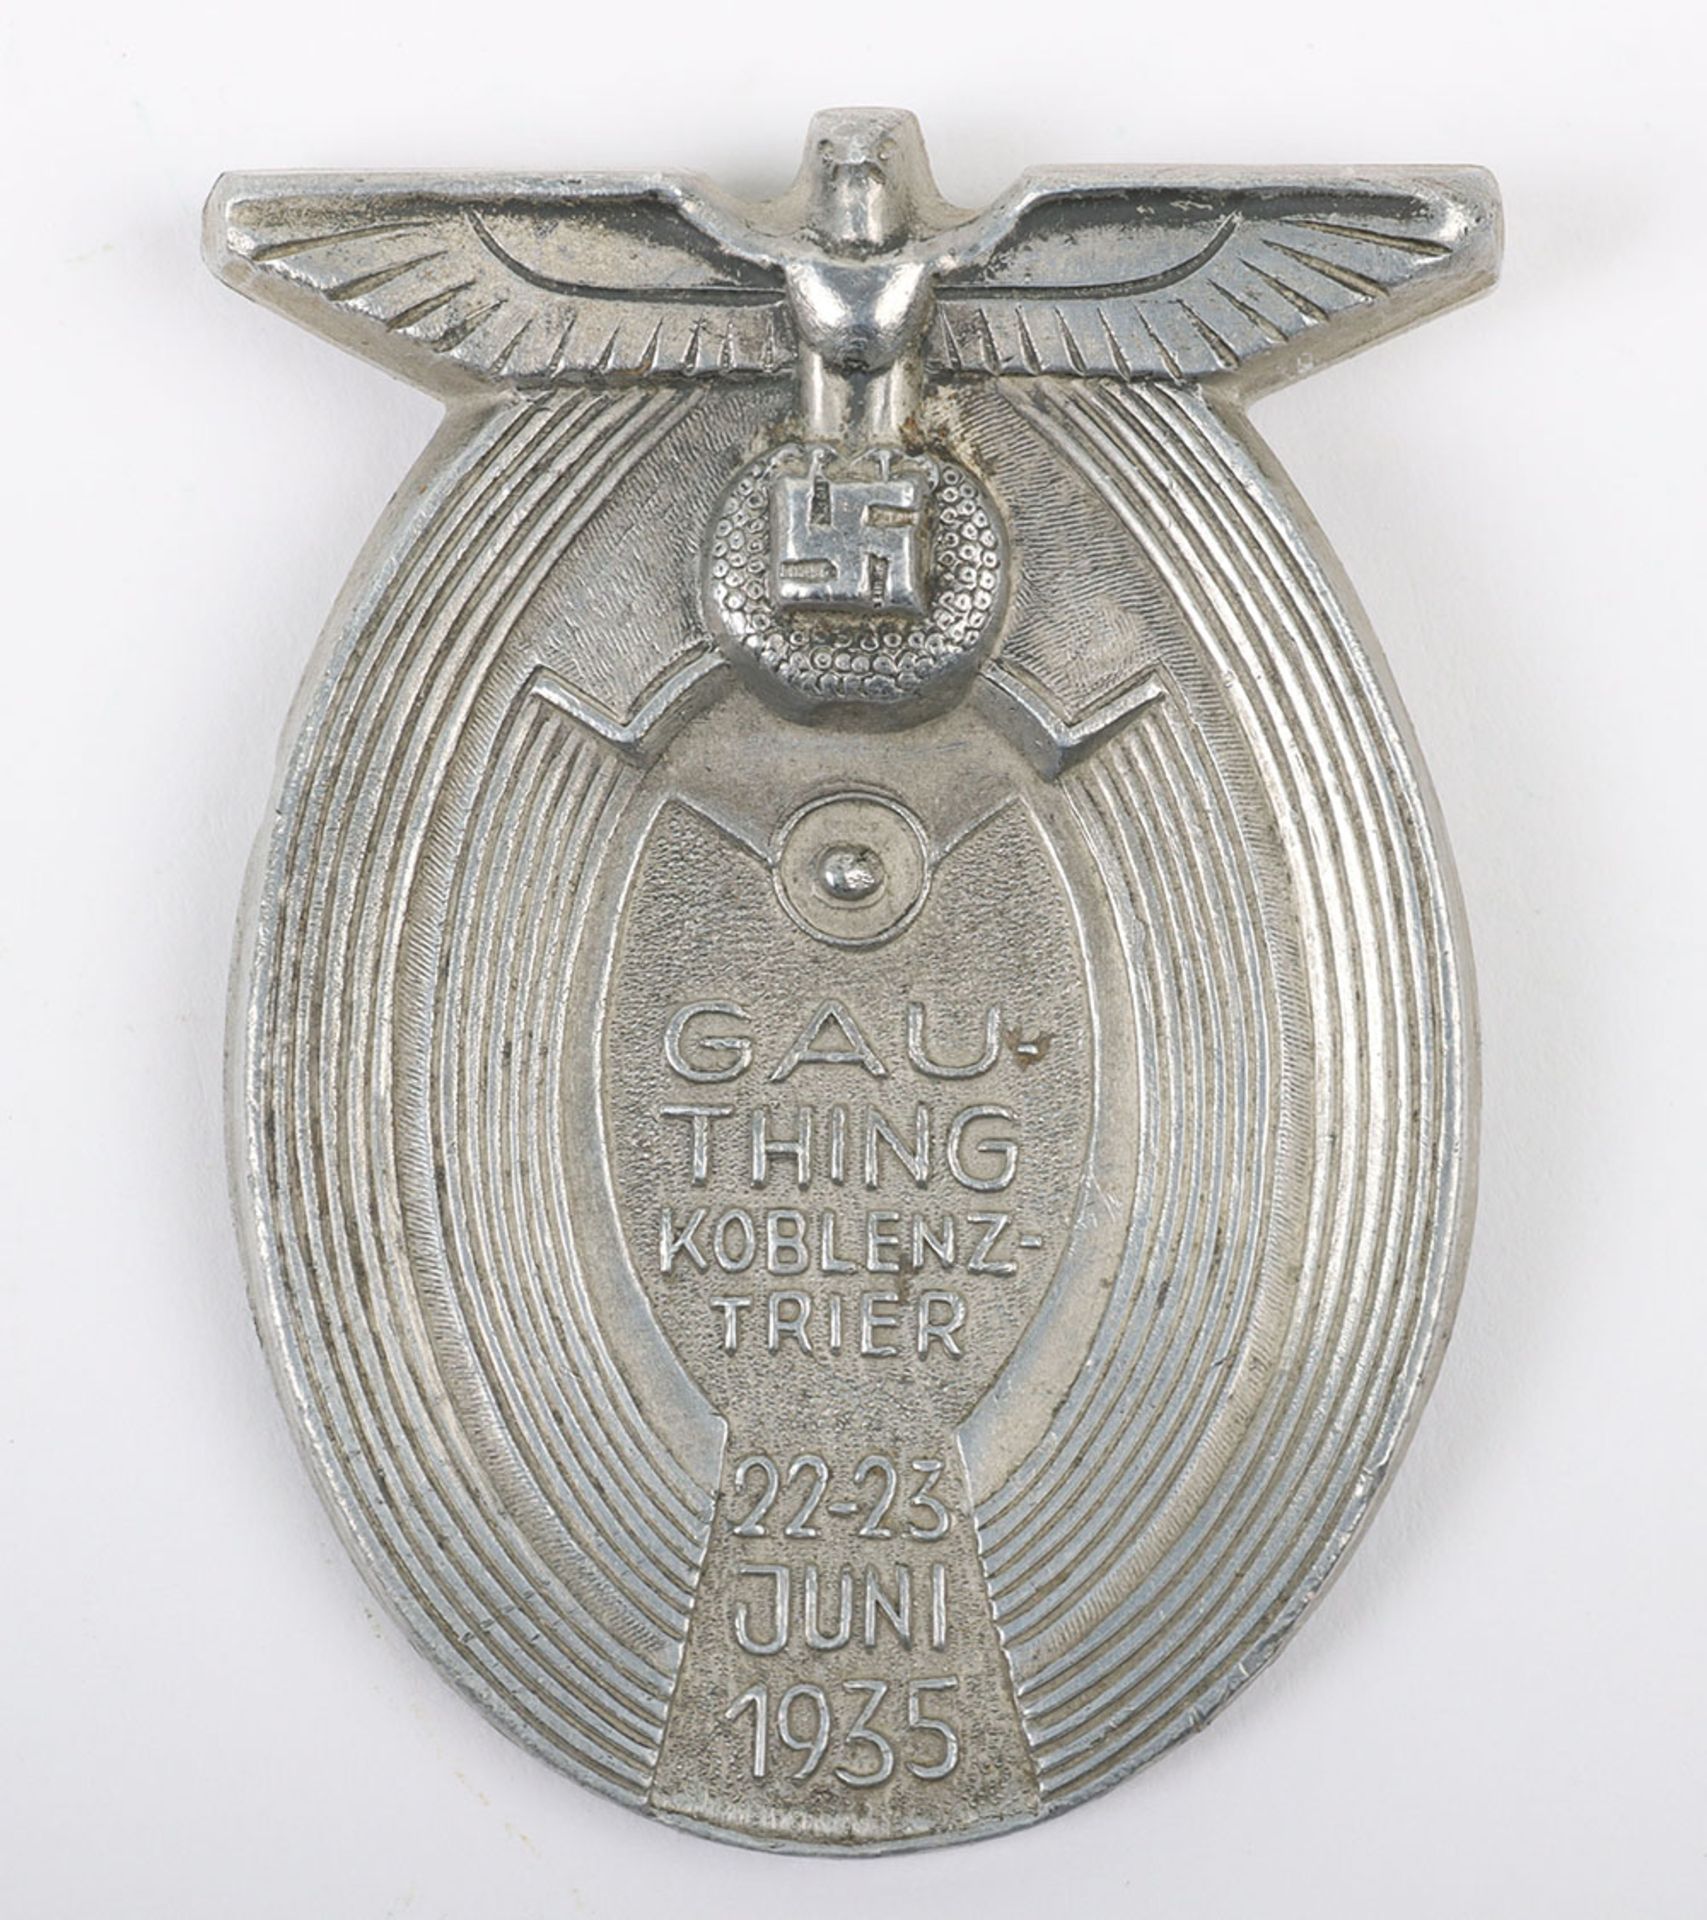 Third Reich Gau-Thing Koblenz-Trier 1935 Day Badge - Image 2 of 3